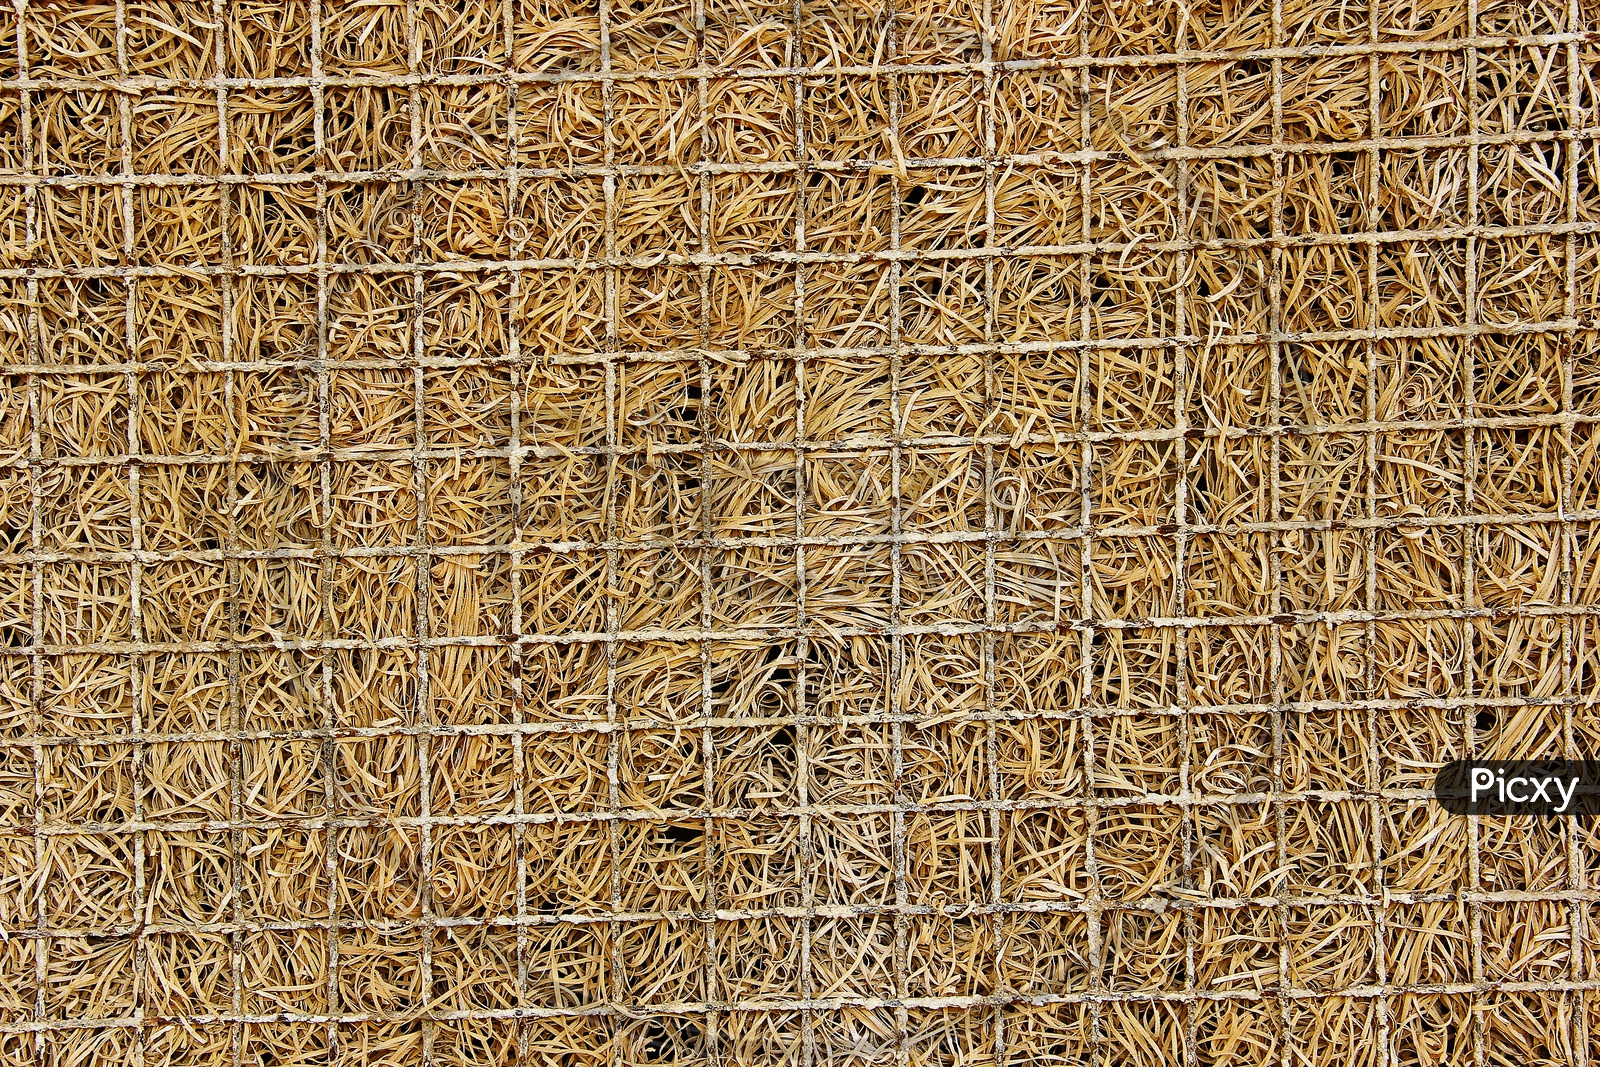 view of a coir